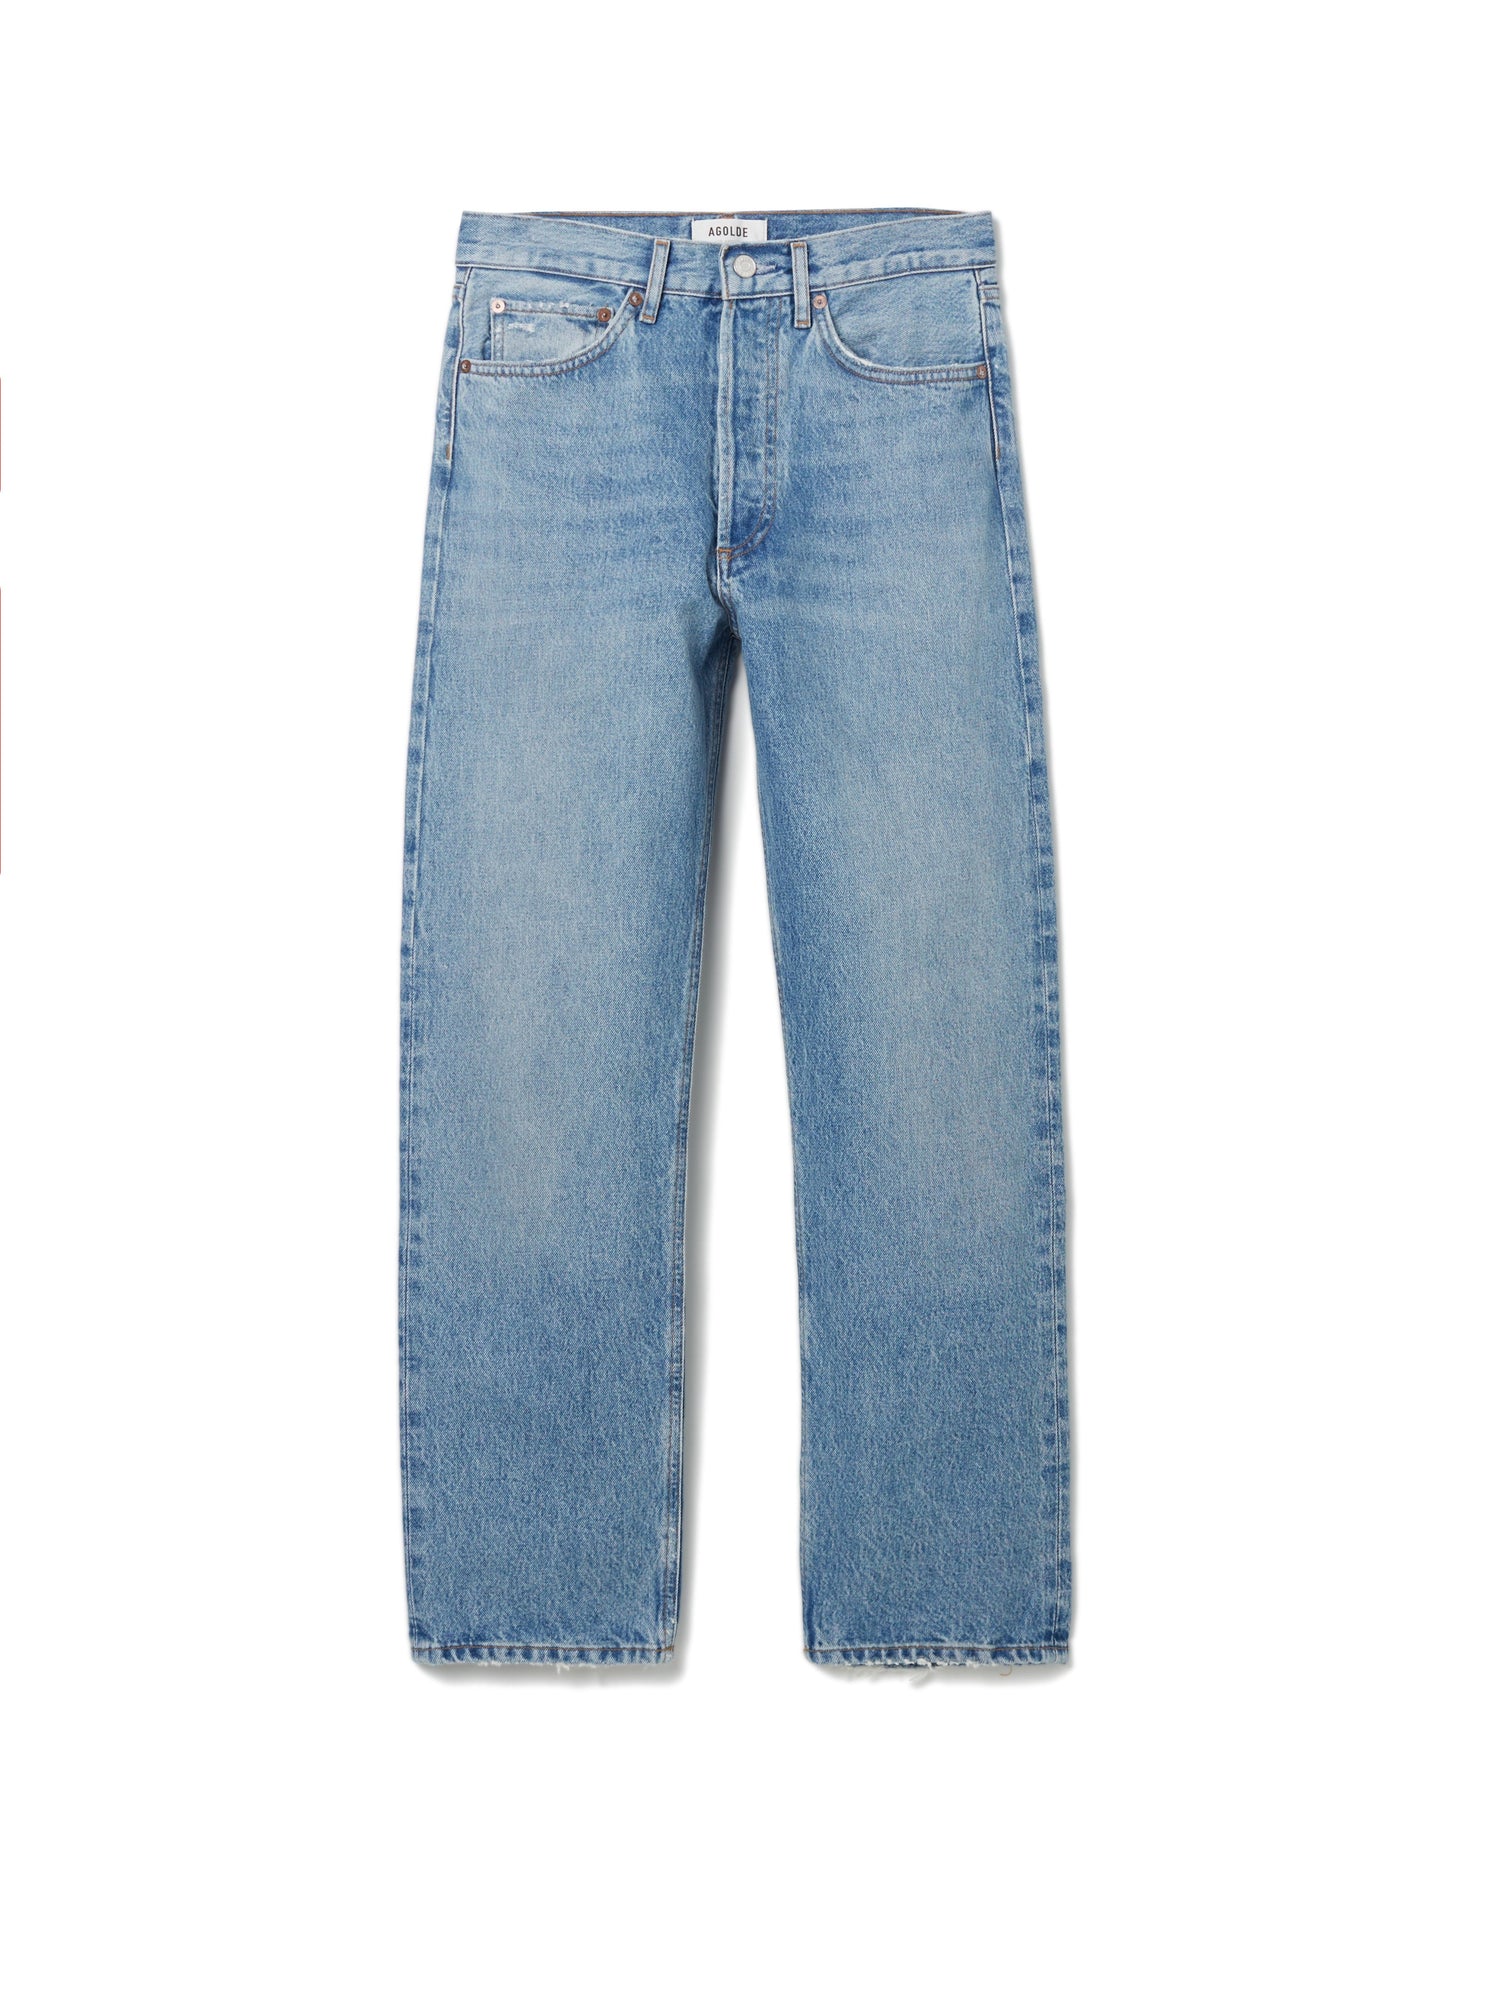 Agolde - Scheme Jeans 90s Jeans AGOLDE DENIM 24 